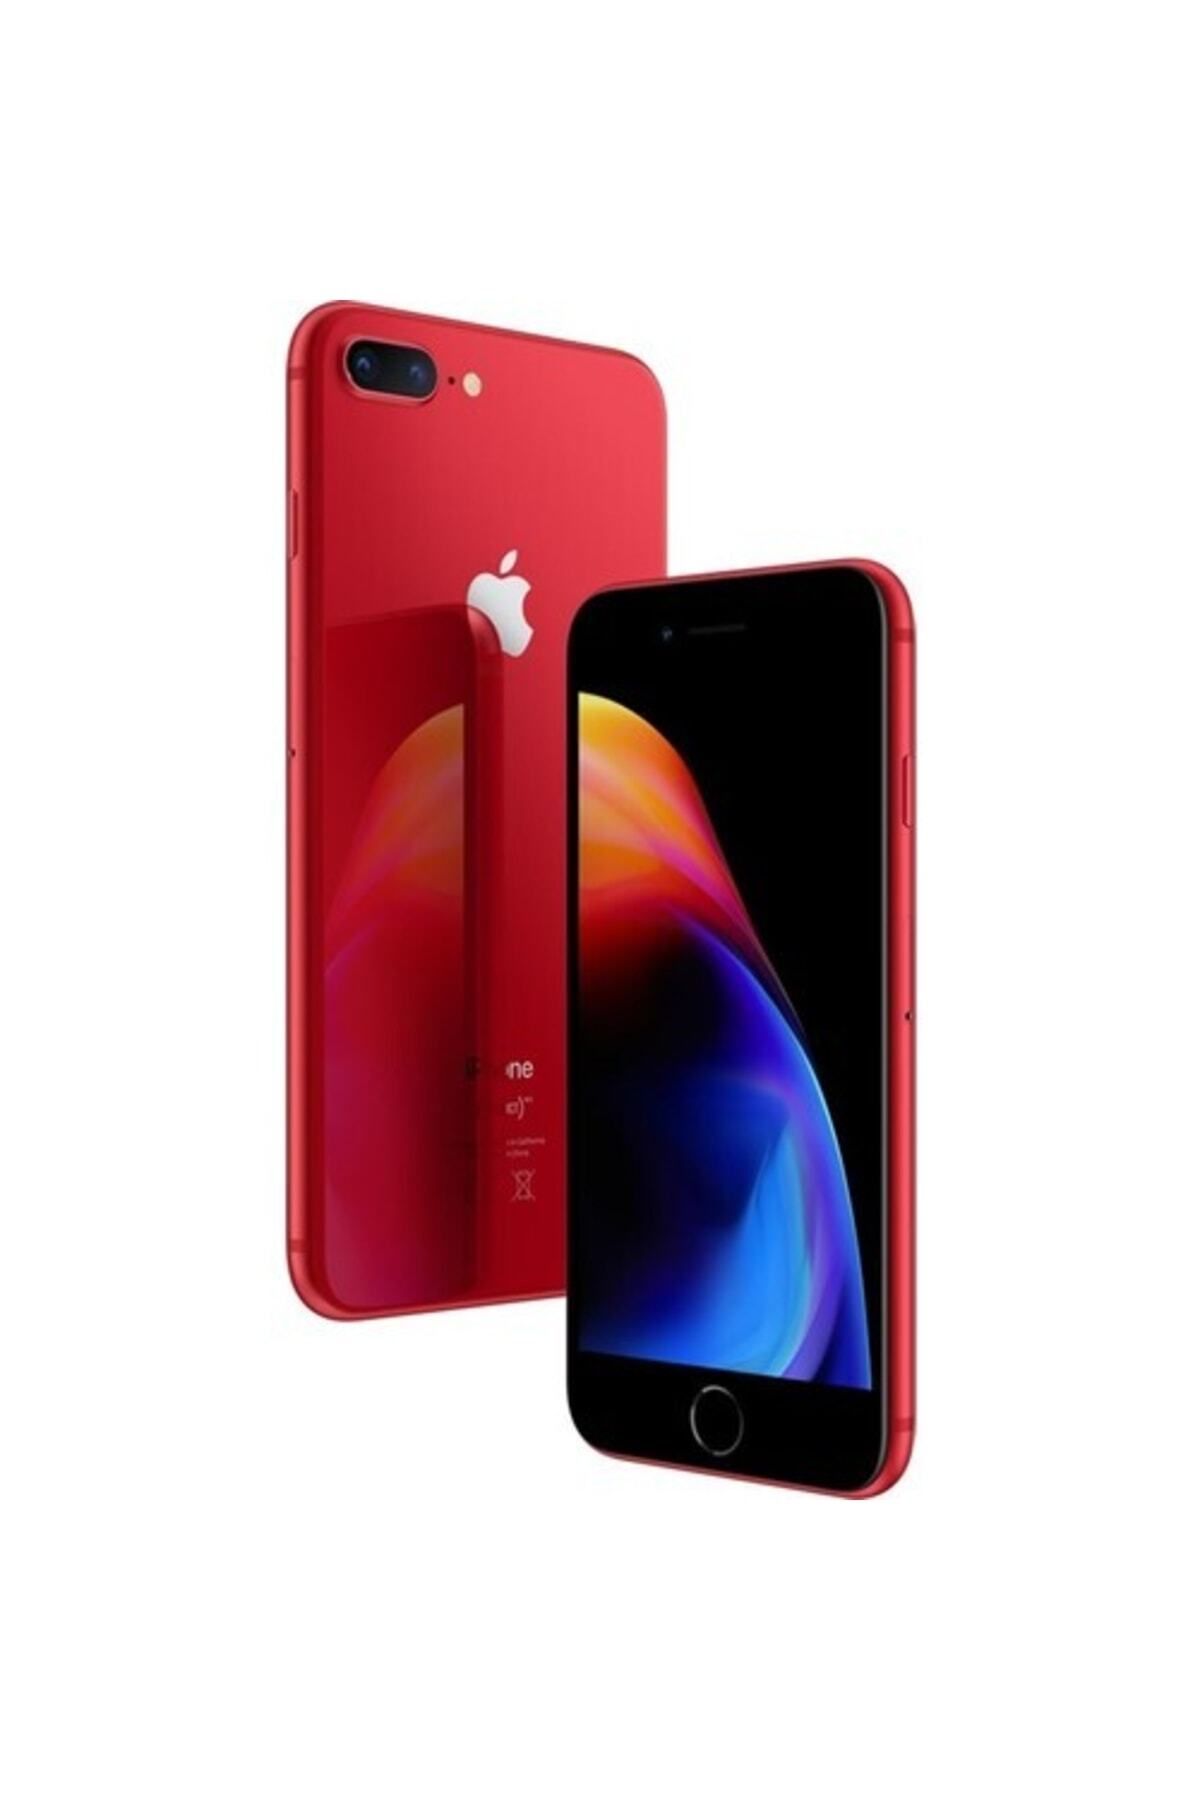 Apple Yenilenmiş iPhone 8 Plus Red Special Edition 64 GB B Kalite (12 Ay Garantili)